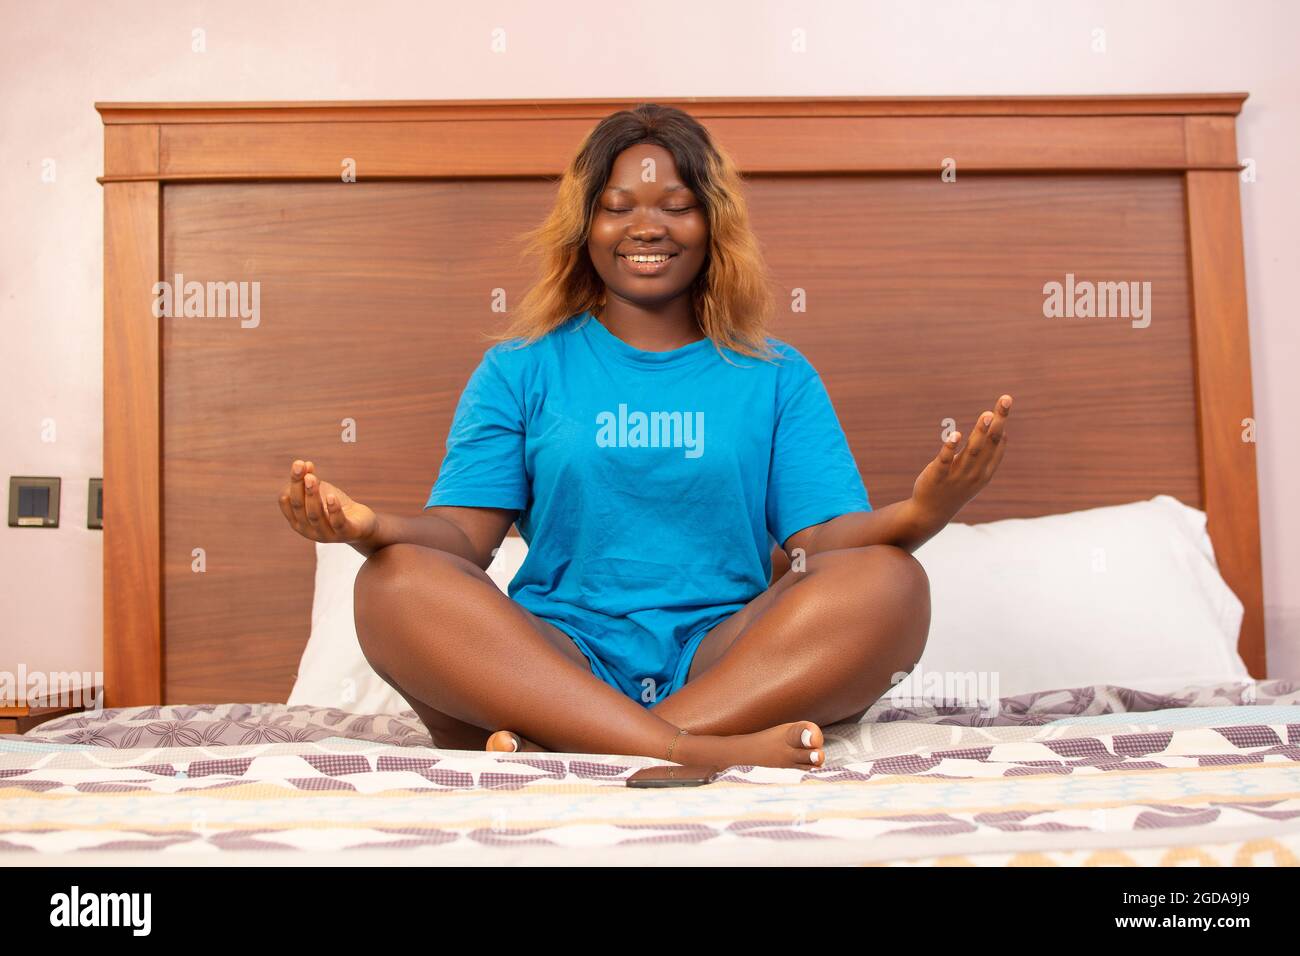 Little girl sitting in yoga pose Stock Photo - Alamy